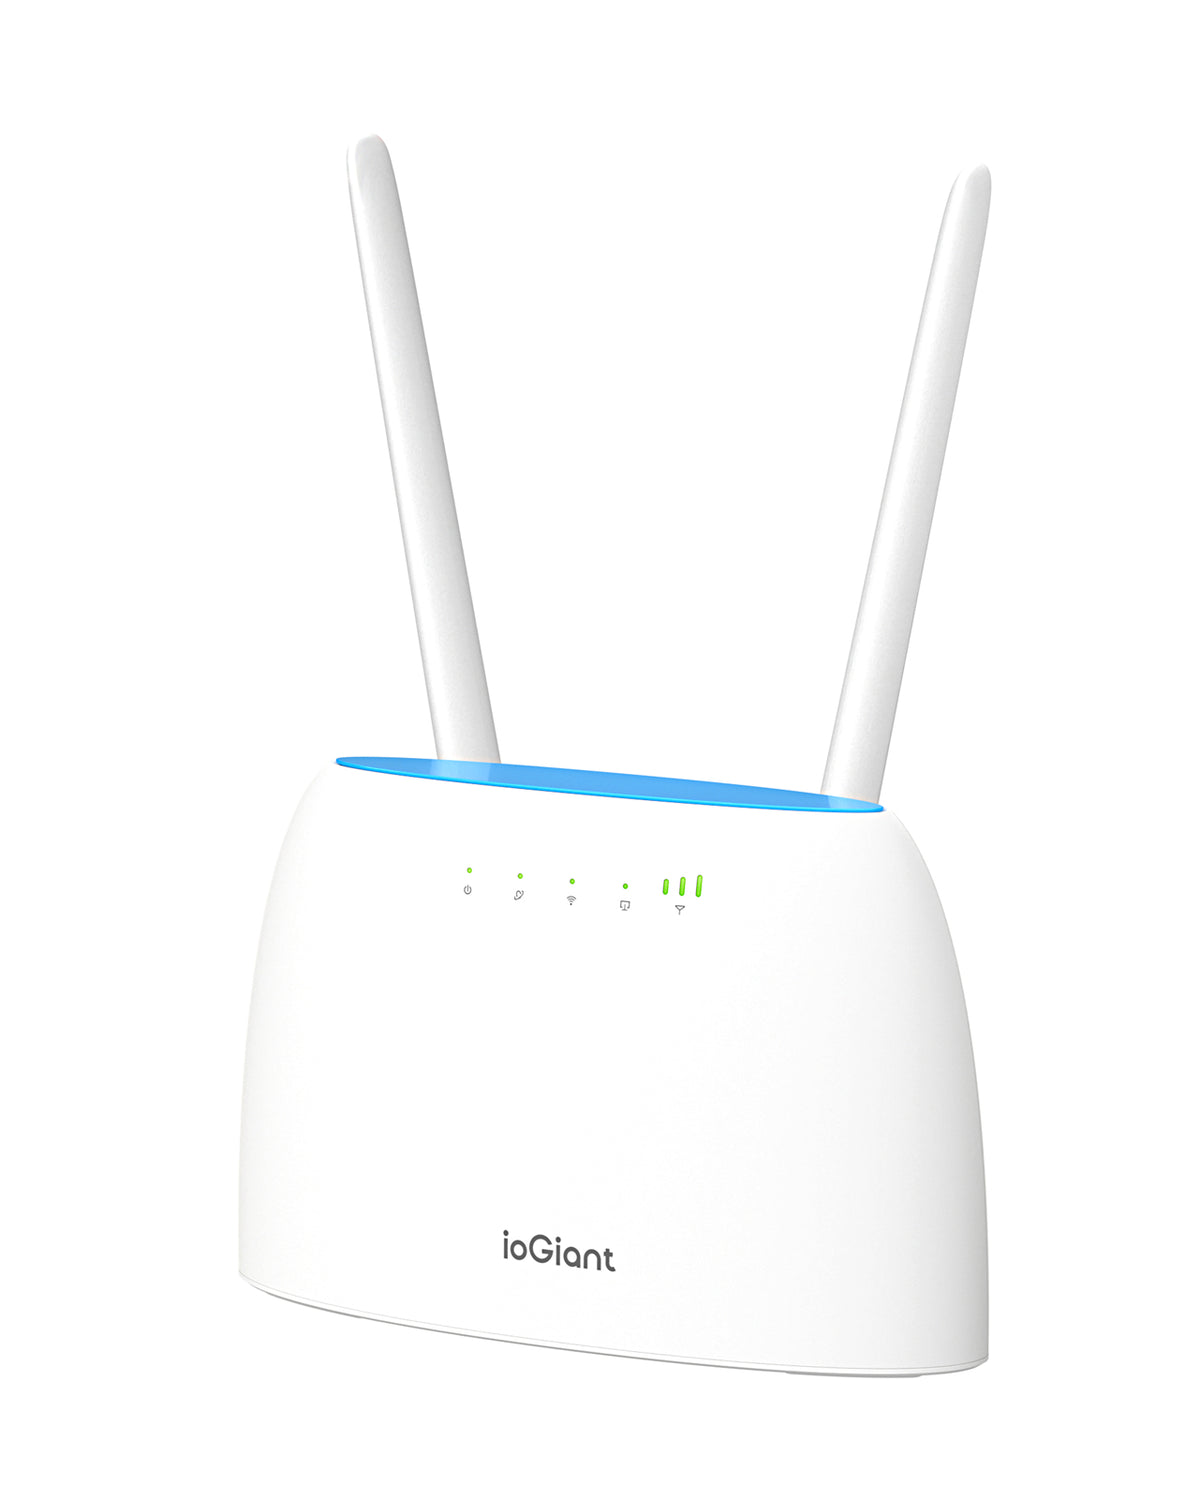 ioGiant 4G LTE router